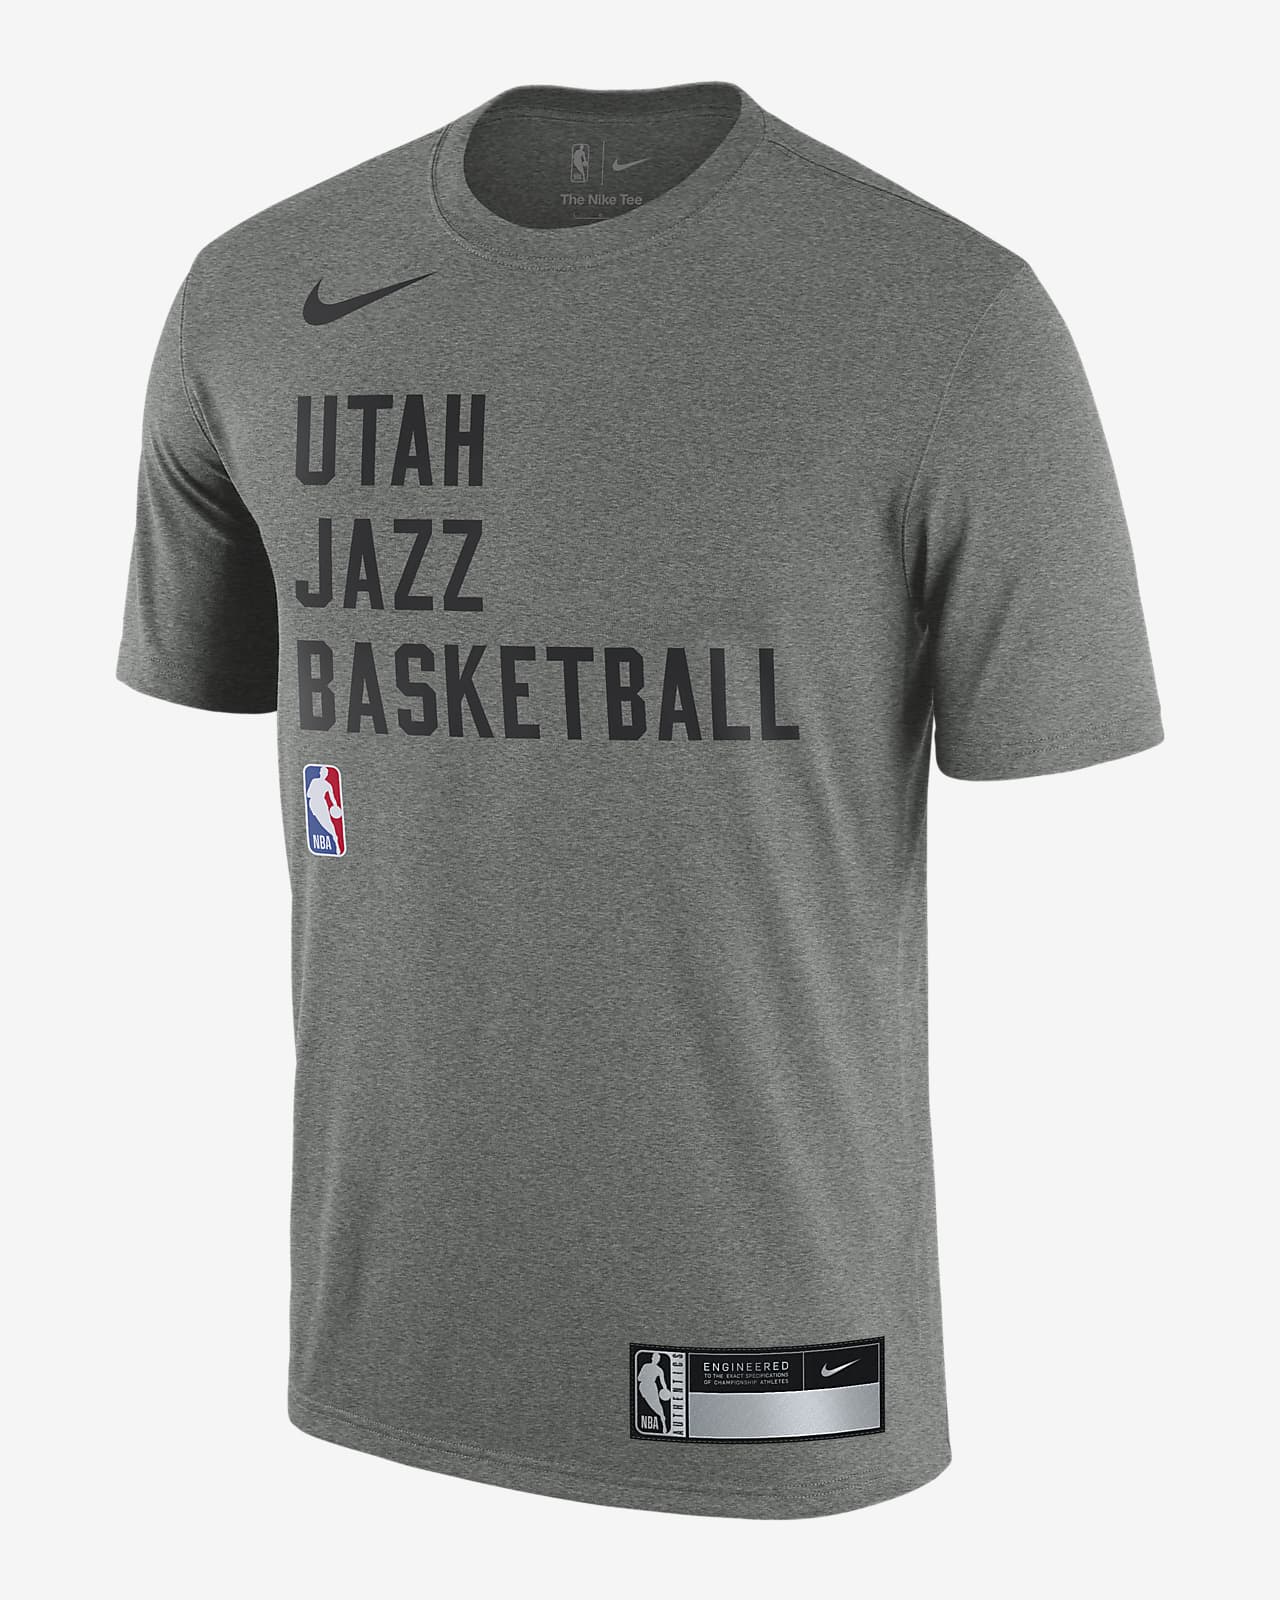 Playera de práctica Nike Dri-FIT NBA para hombre Utah Jazz